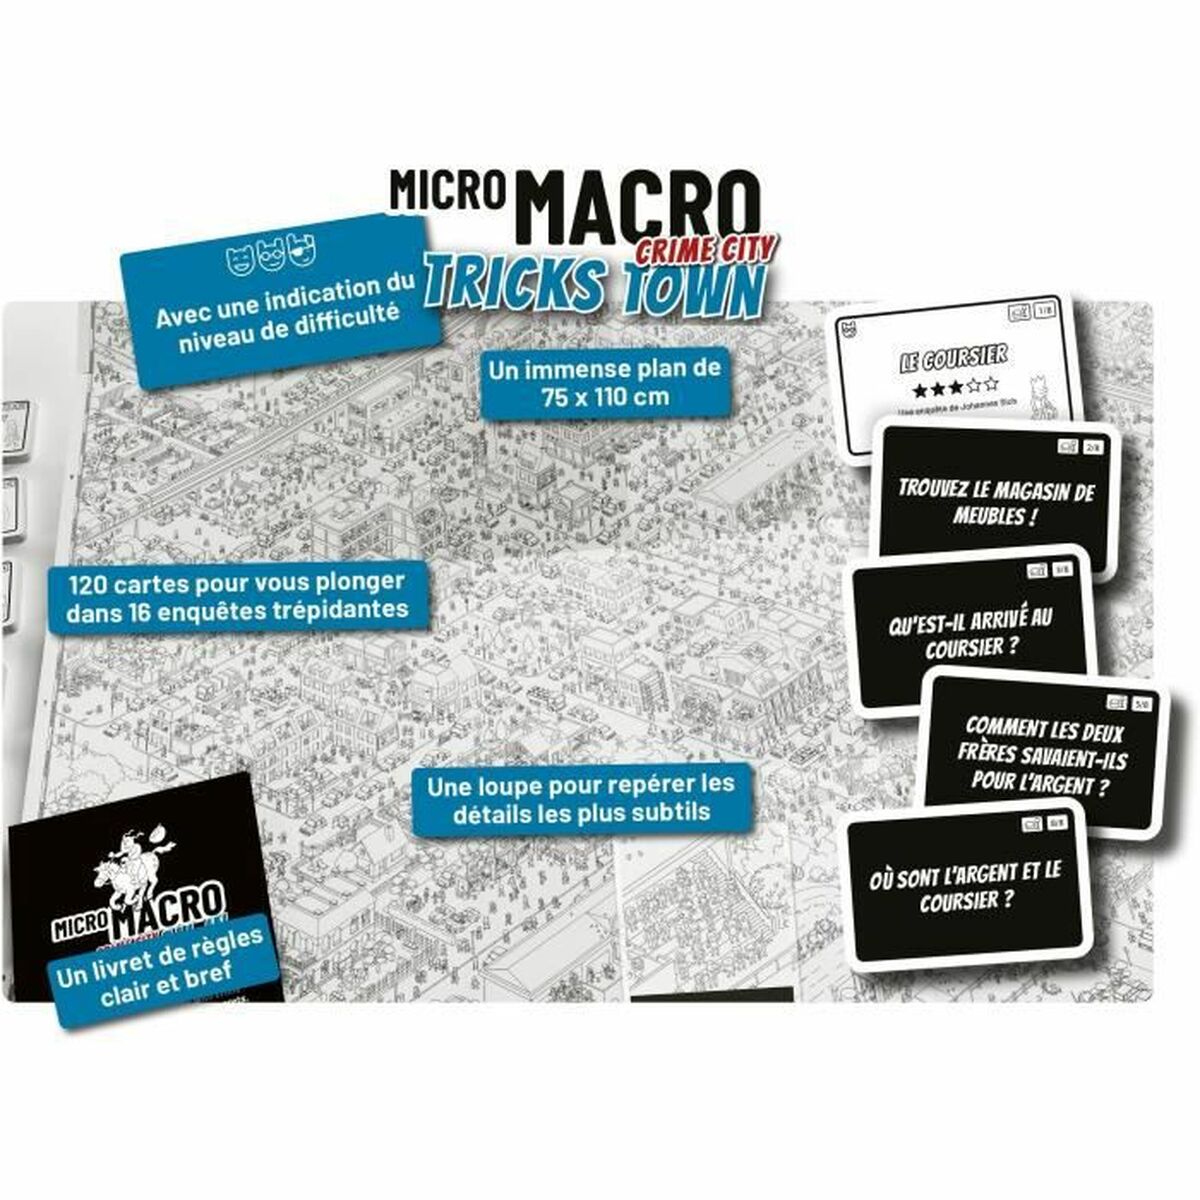 Board game BlackRock Micro Macro: Crime City - Tricks Town